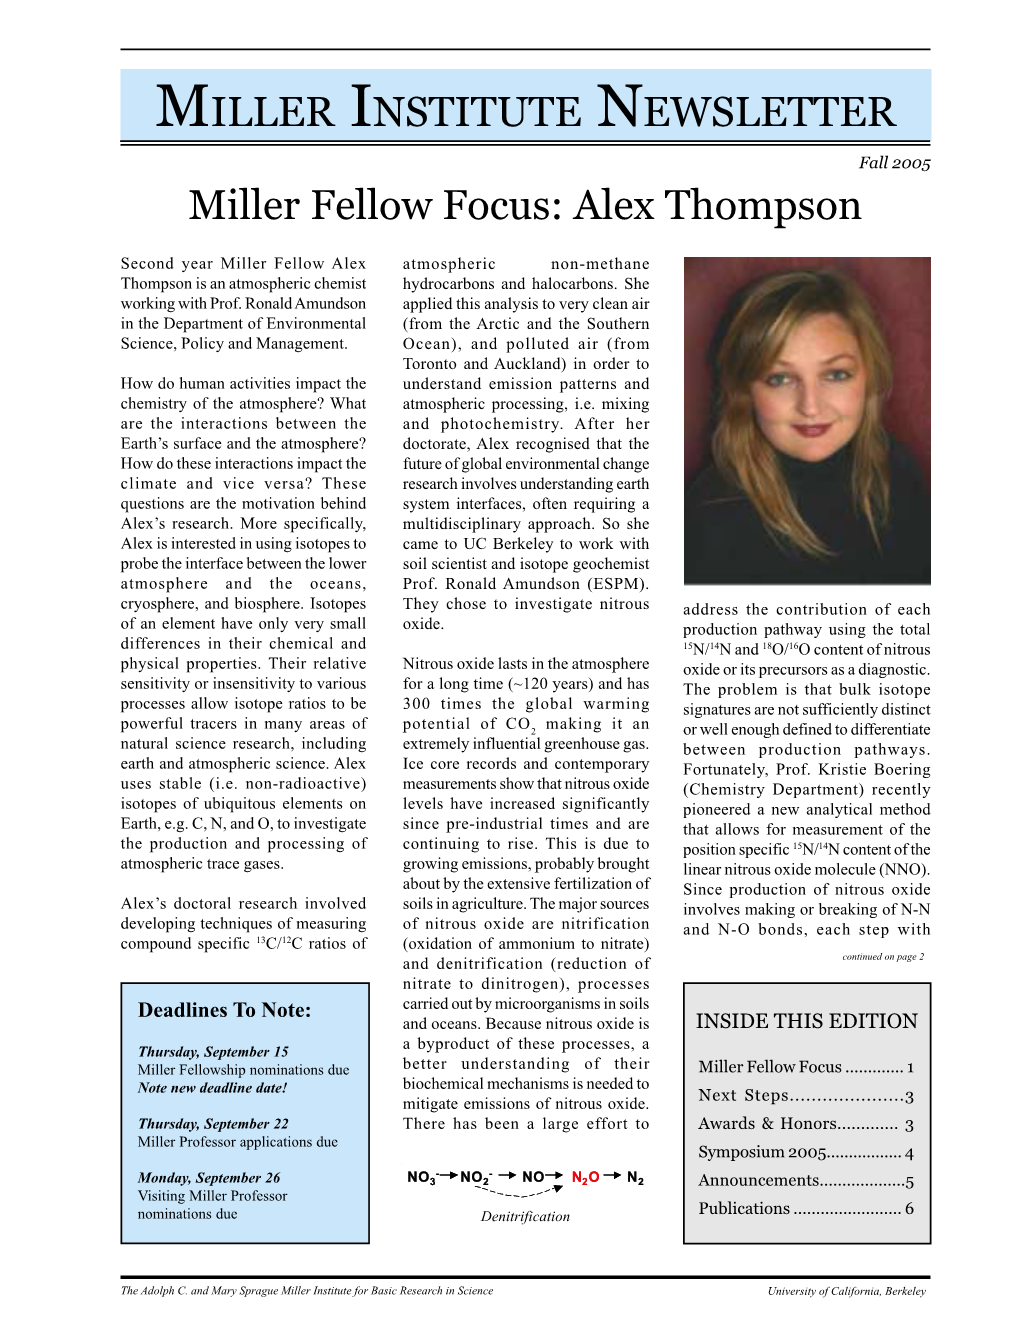 MILLER INSTITUTE NEWSLETTER Miller Fellow Focus: Alex Thompson